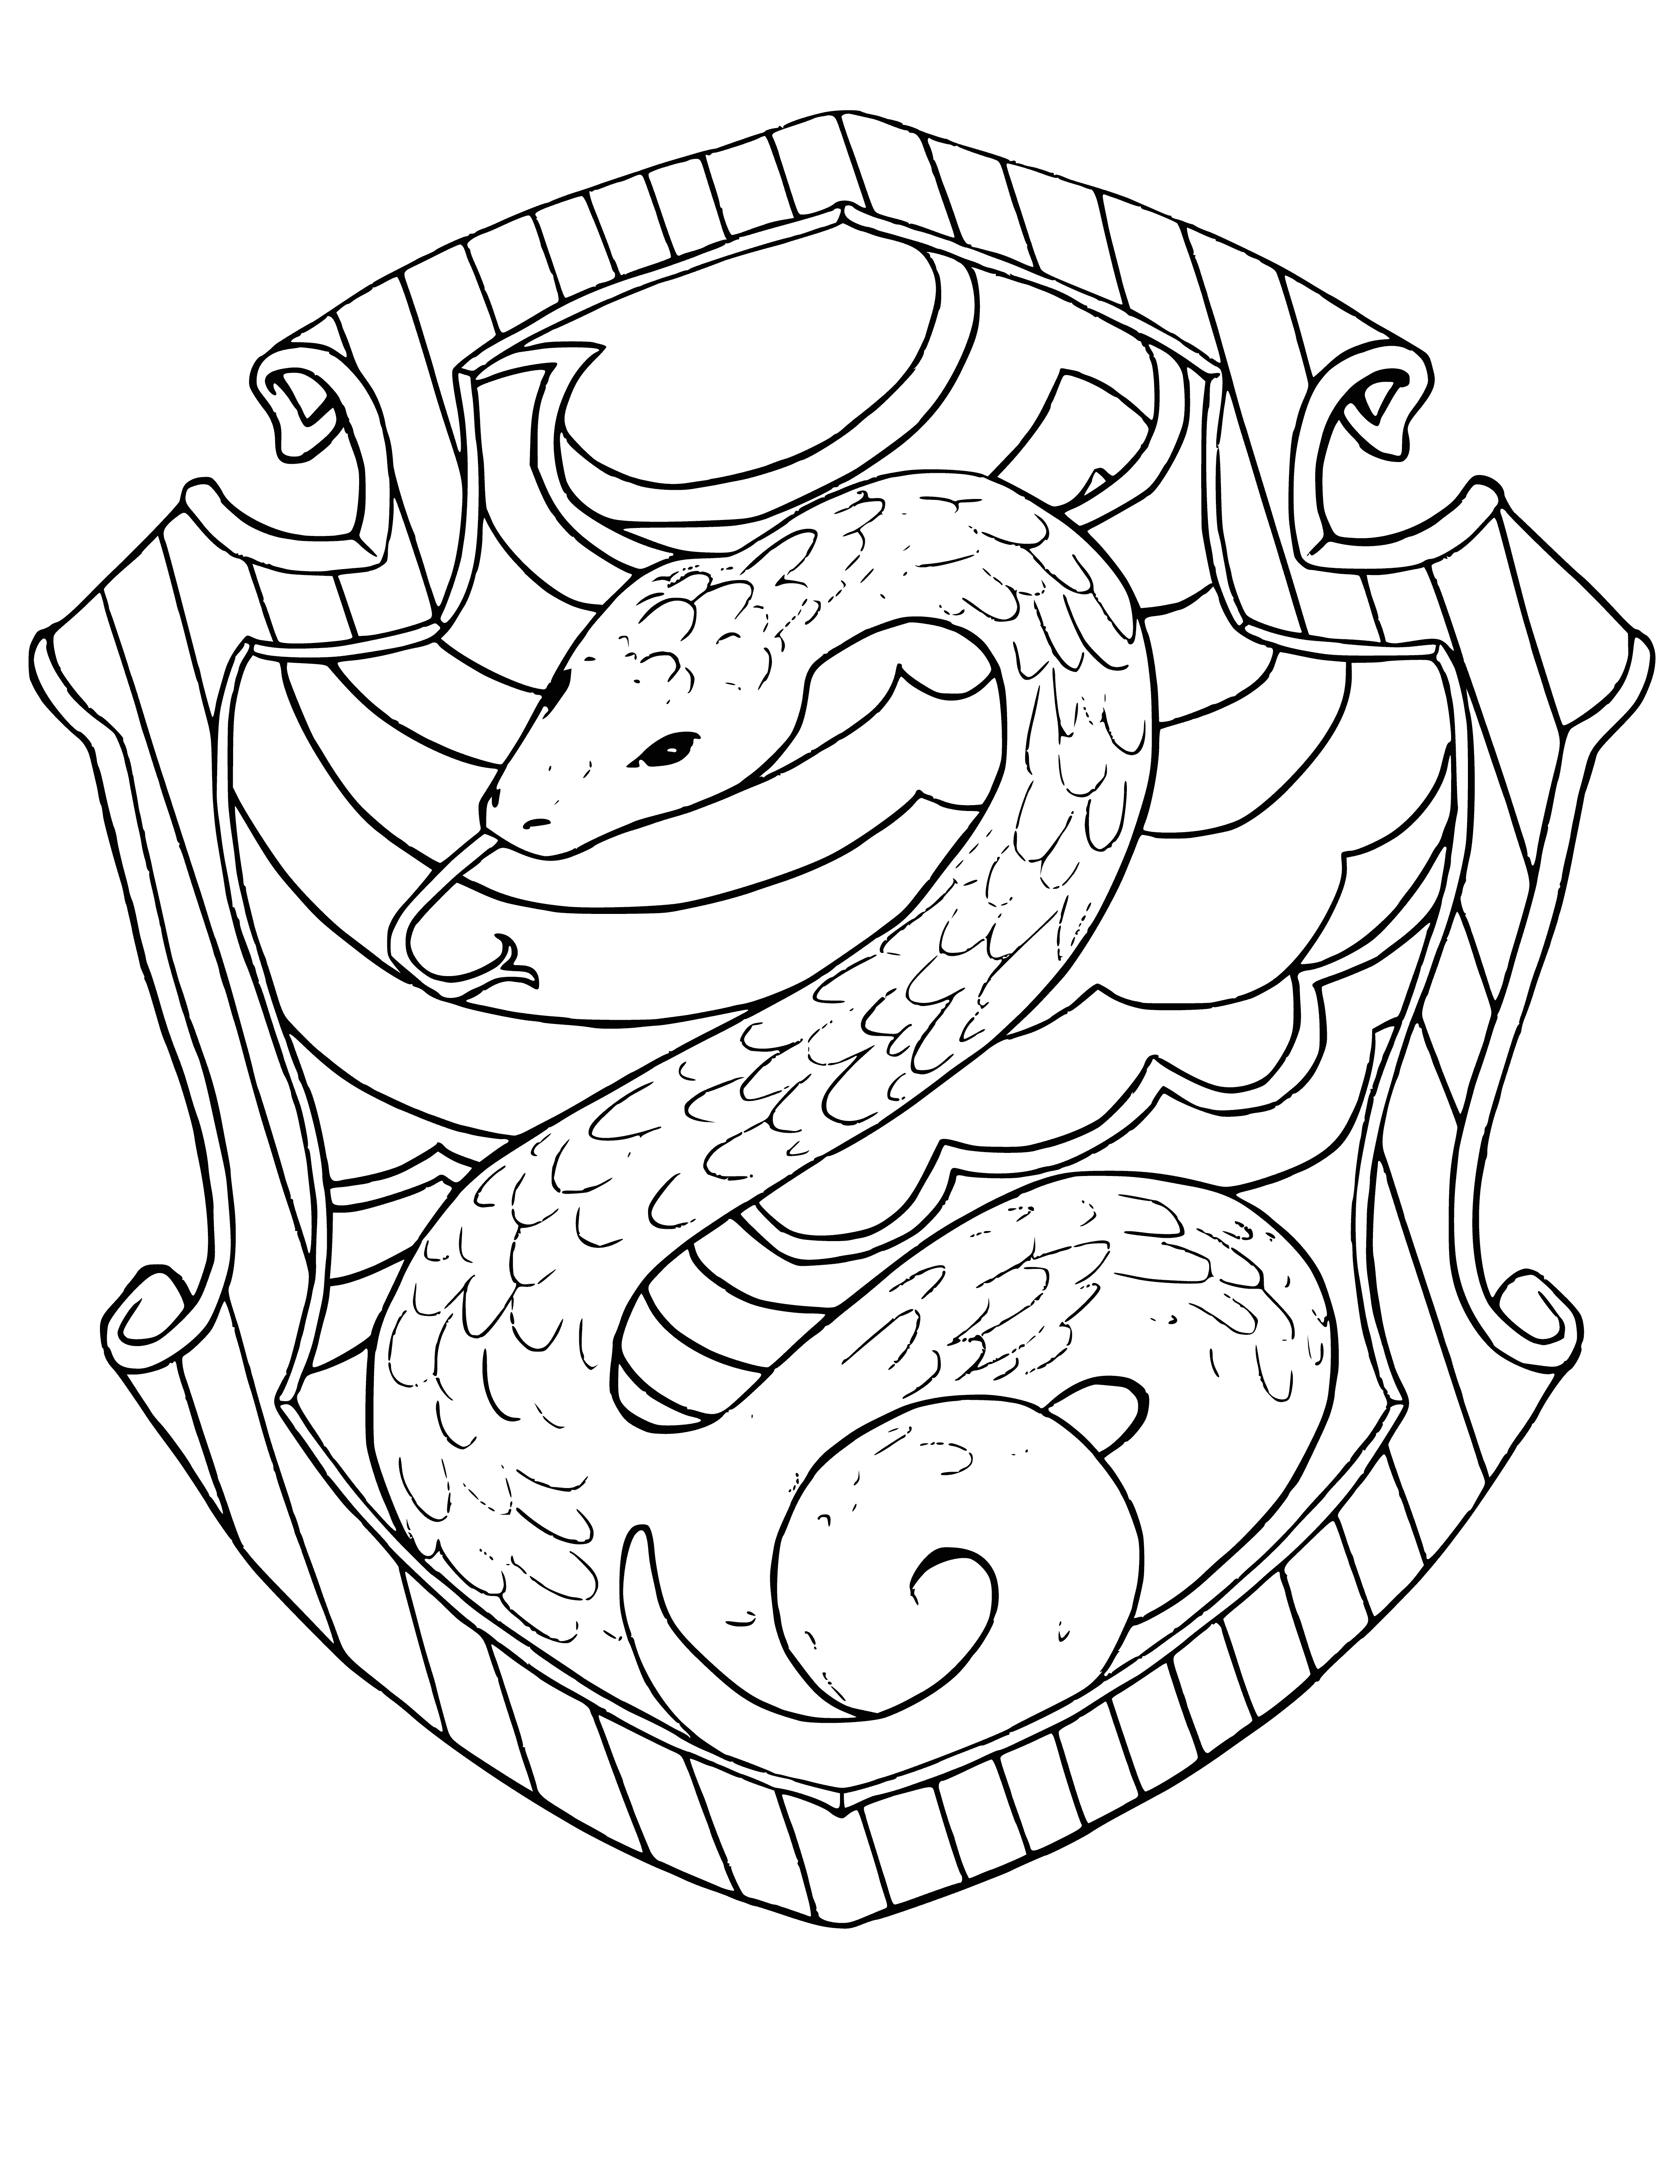 Slytherin House Emblem coloring page